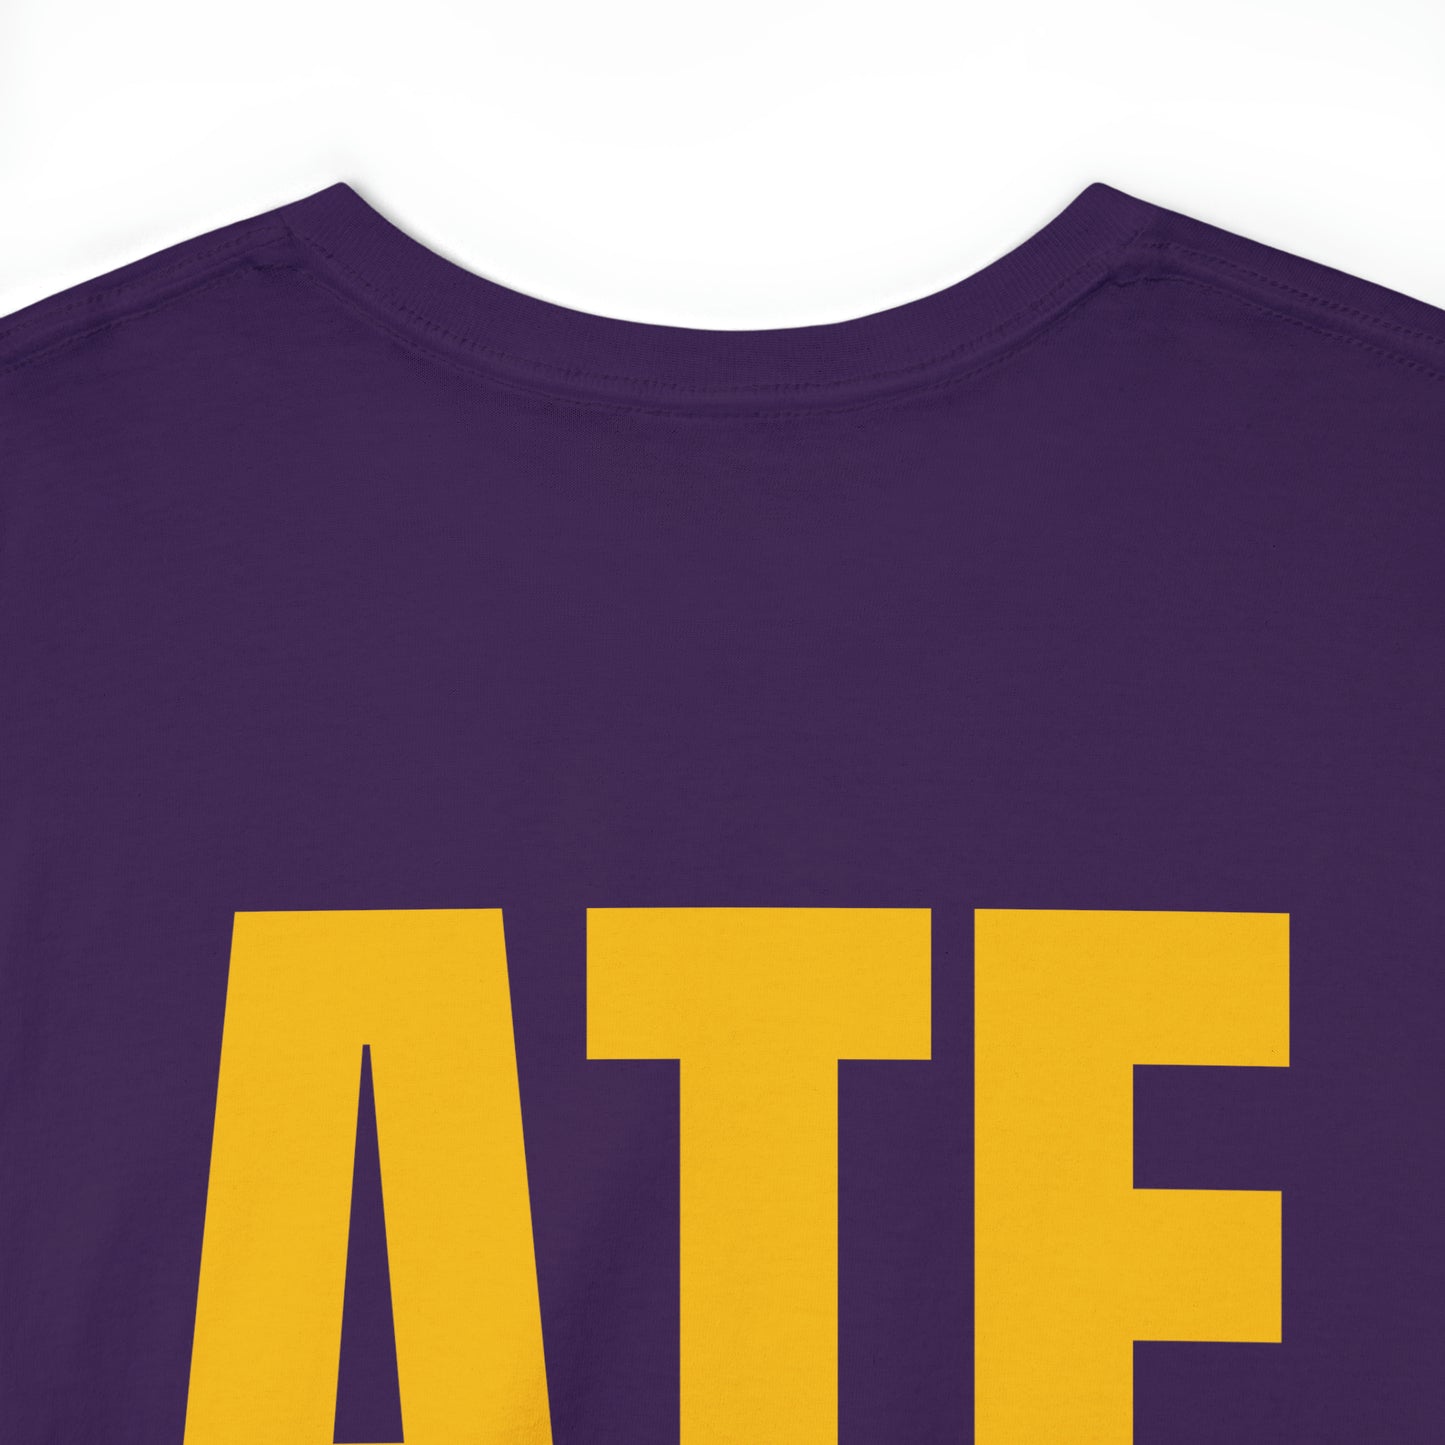 ATF is... Tee